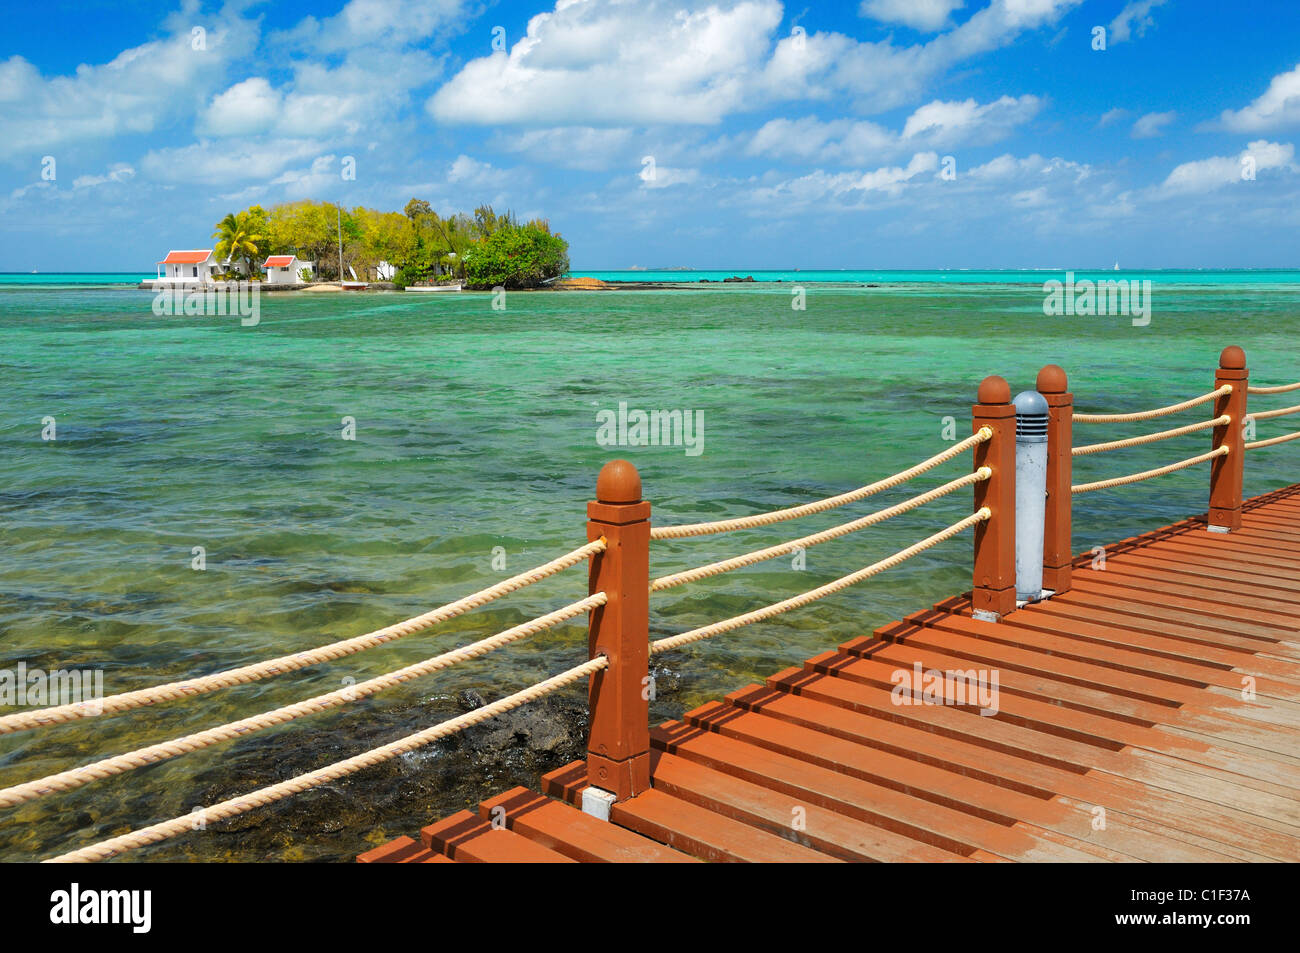 A small island off the coast at Pointe des Régates in Mahebourg, Grand Port, Mauritius. Stock Photo